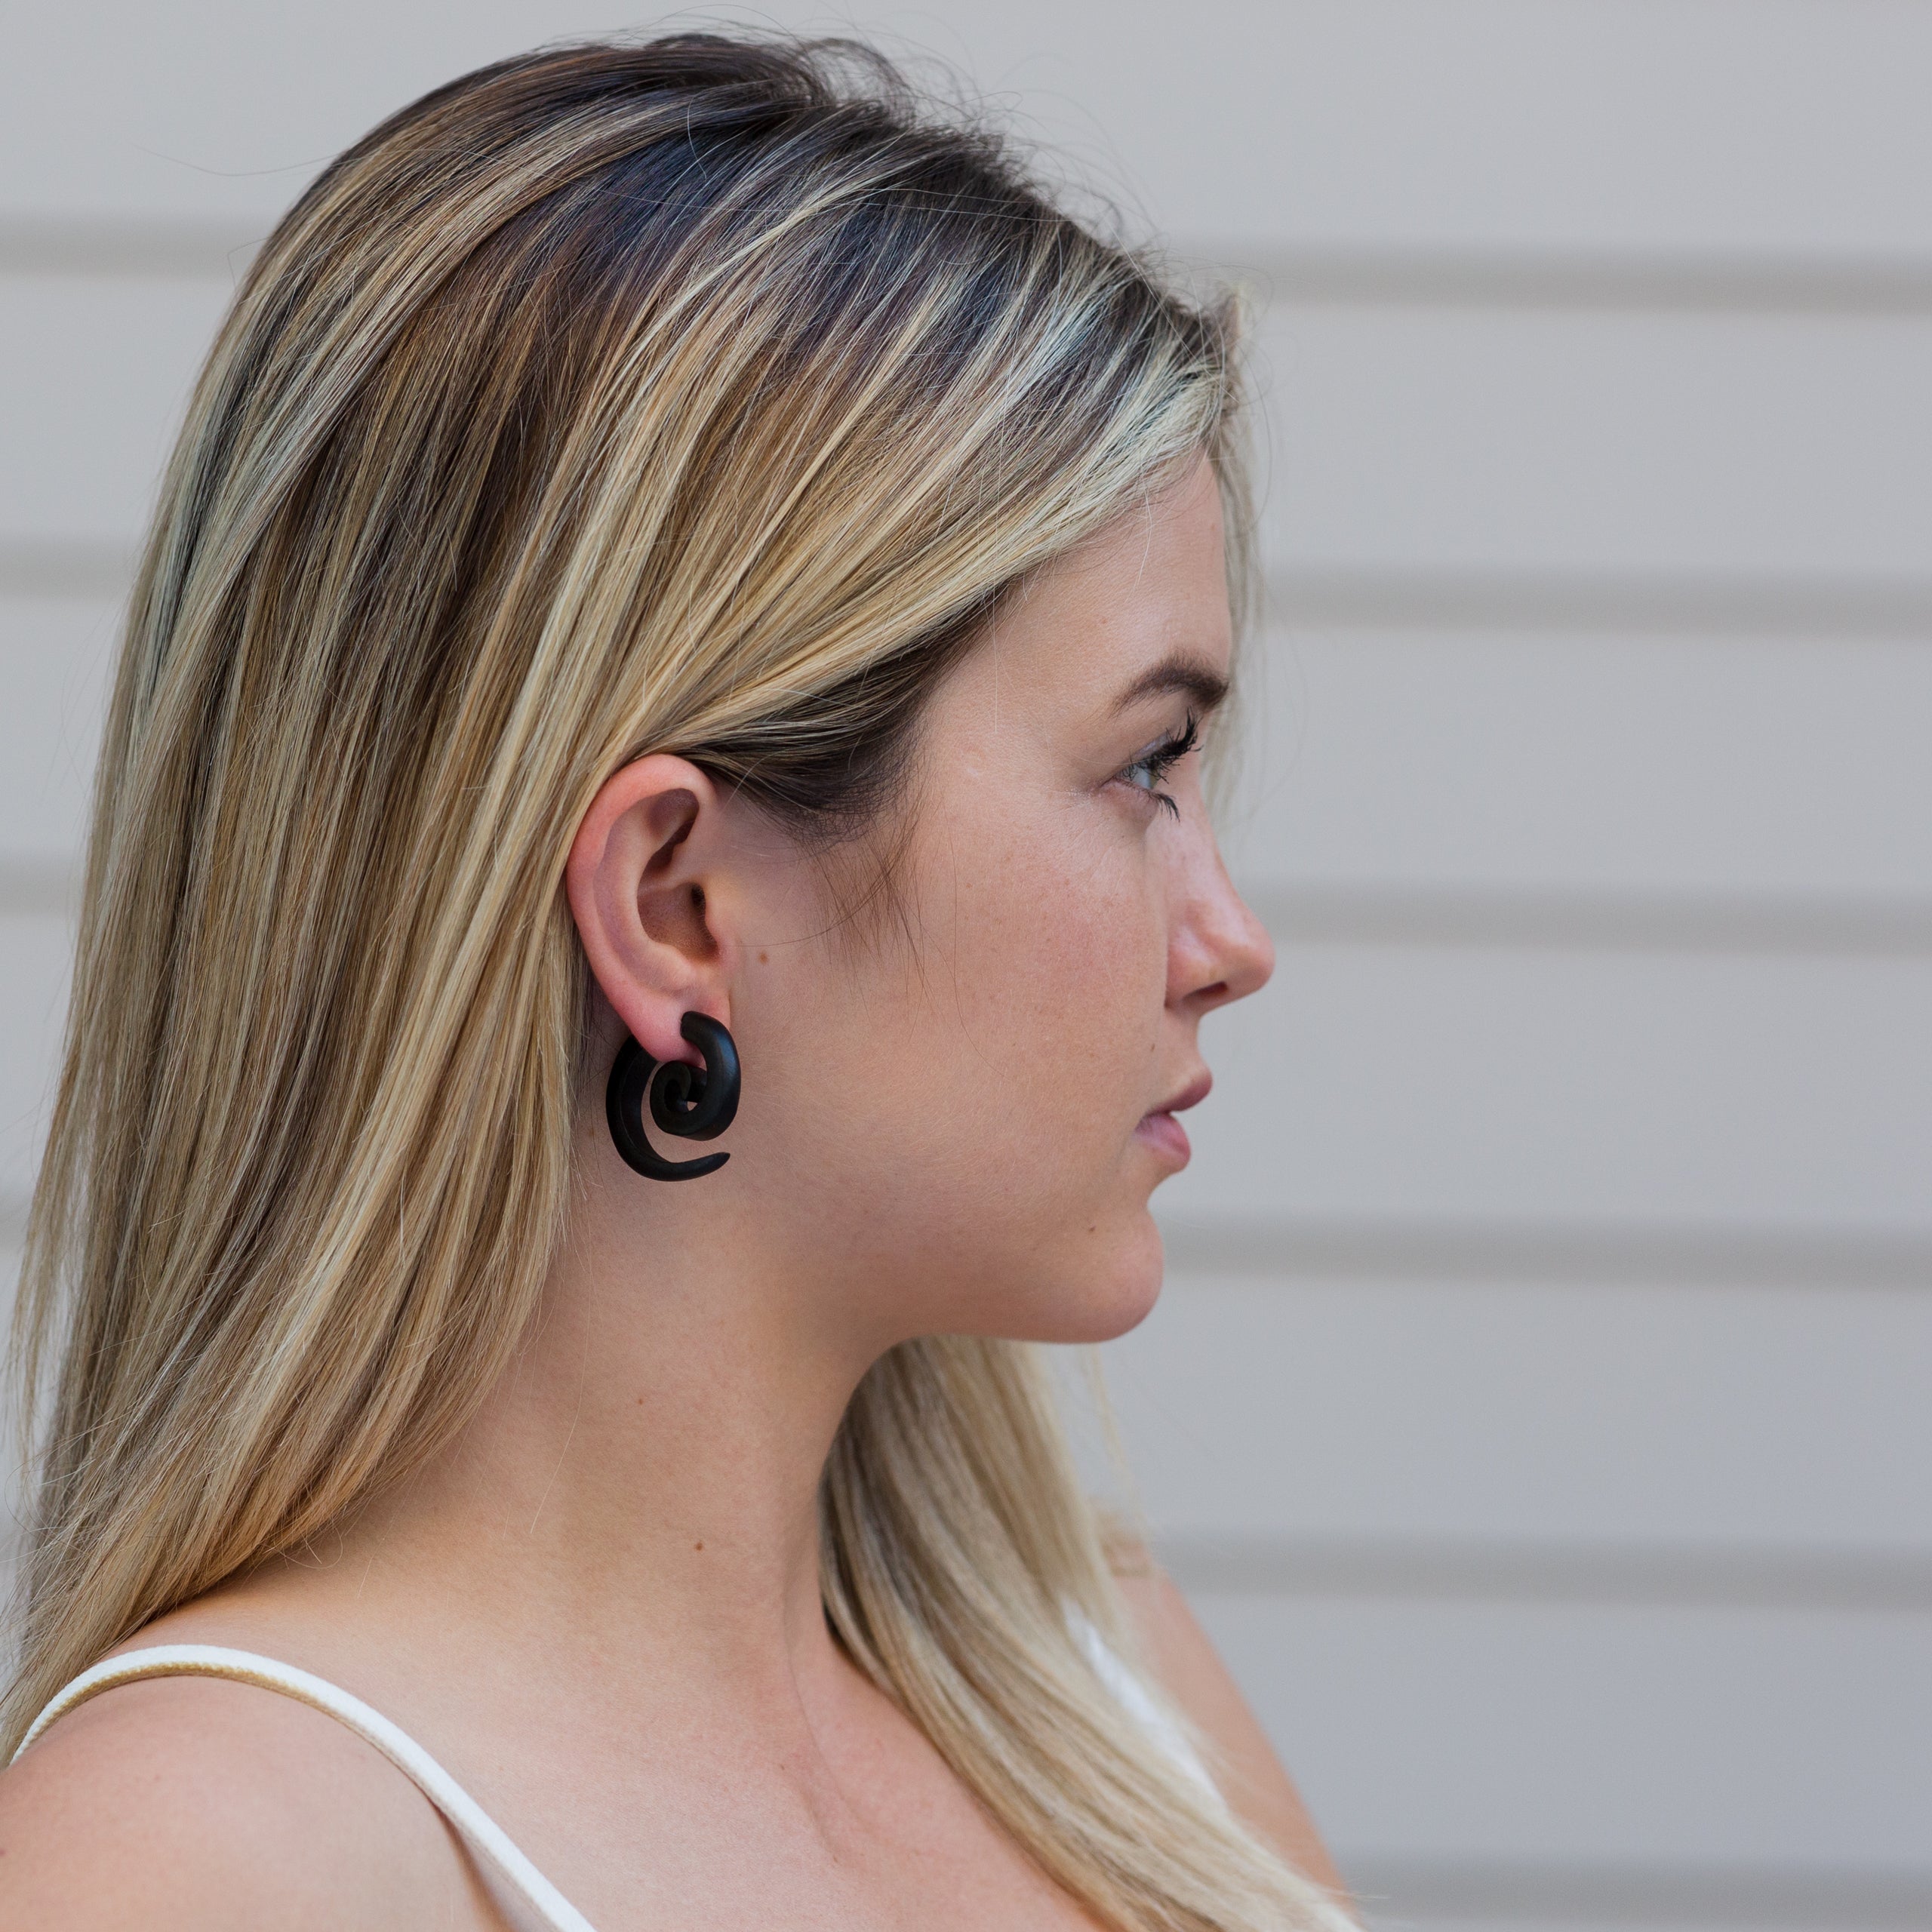 Matte Black Web Earrings| UK Custom Plugs - Ear Gauges, Flesh Tunnels for  Stretched Ears